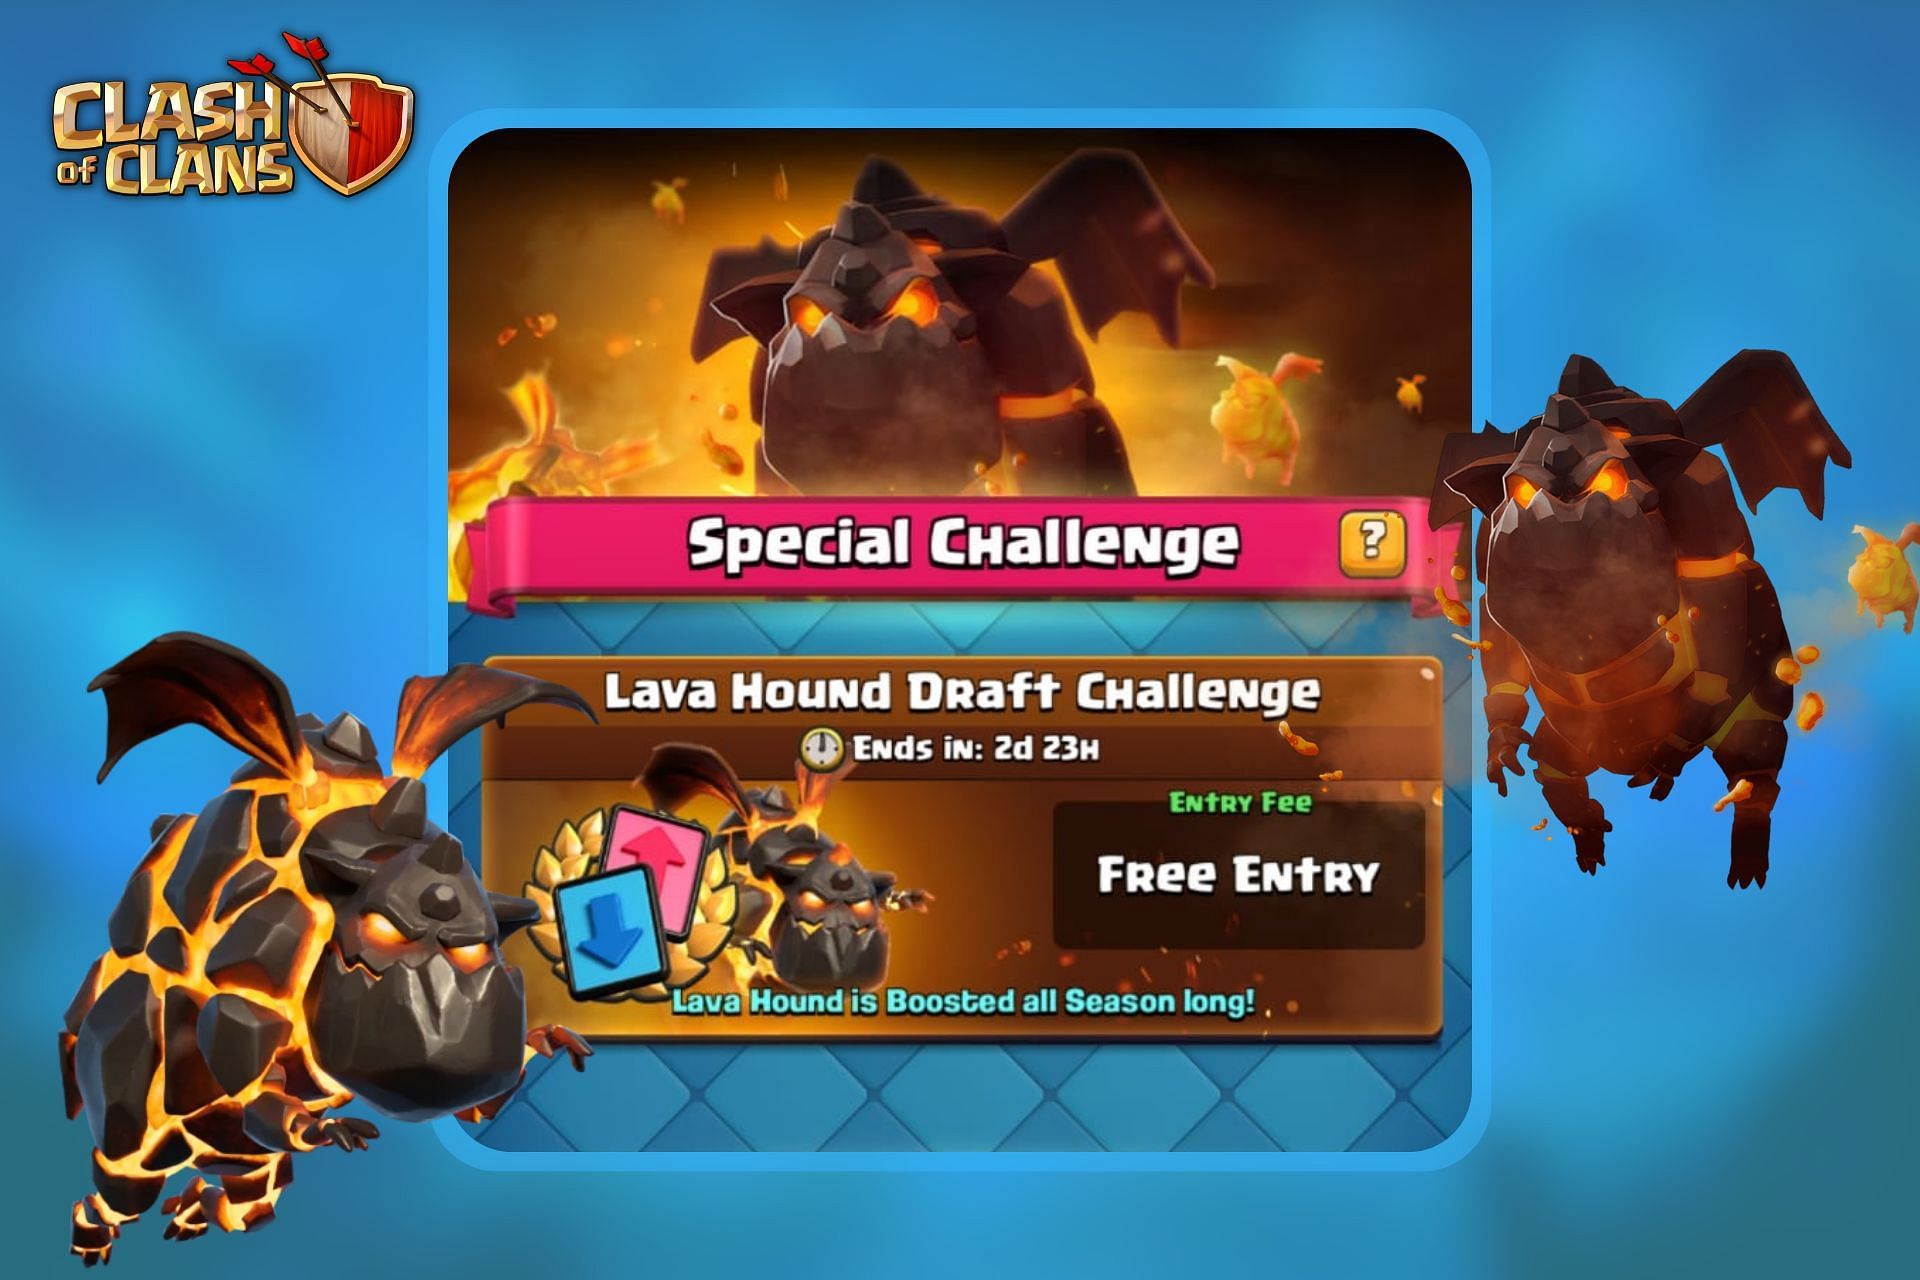 Lava Hound Draft Challenge in Clash Royale (Image via Sportskeeda)